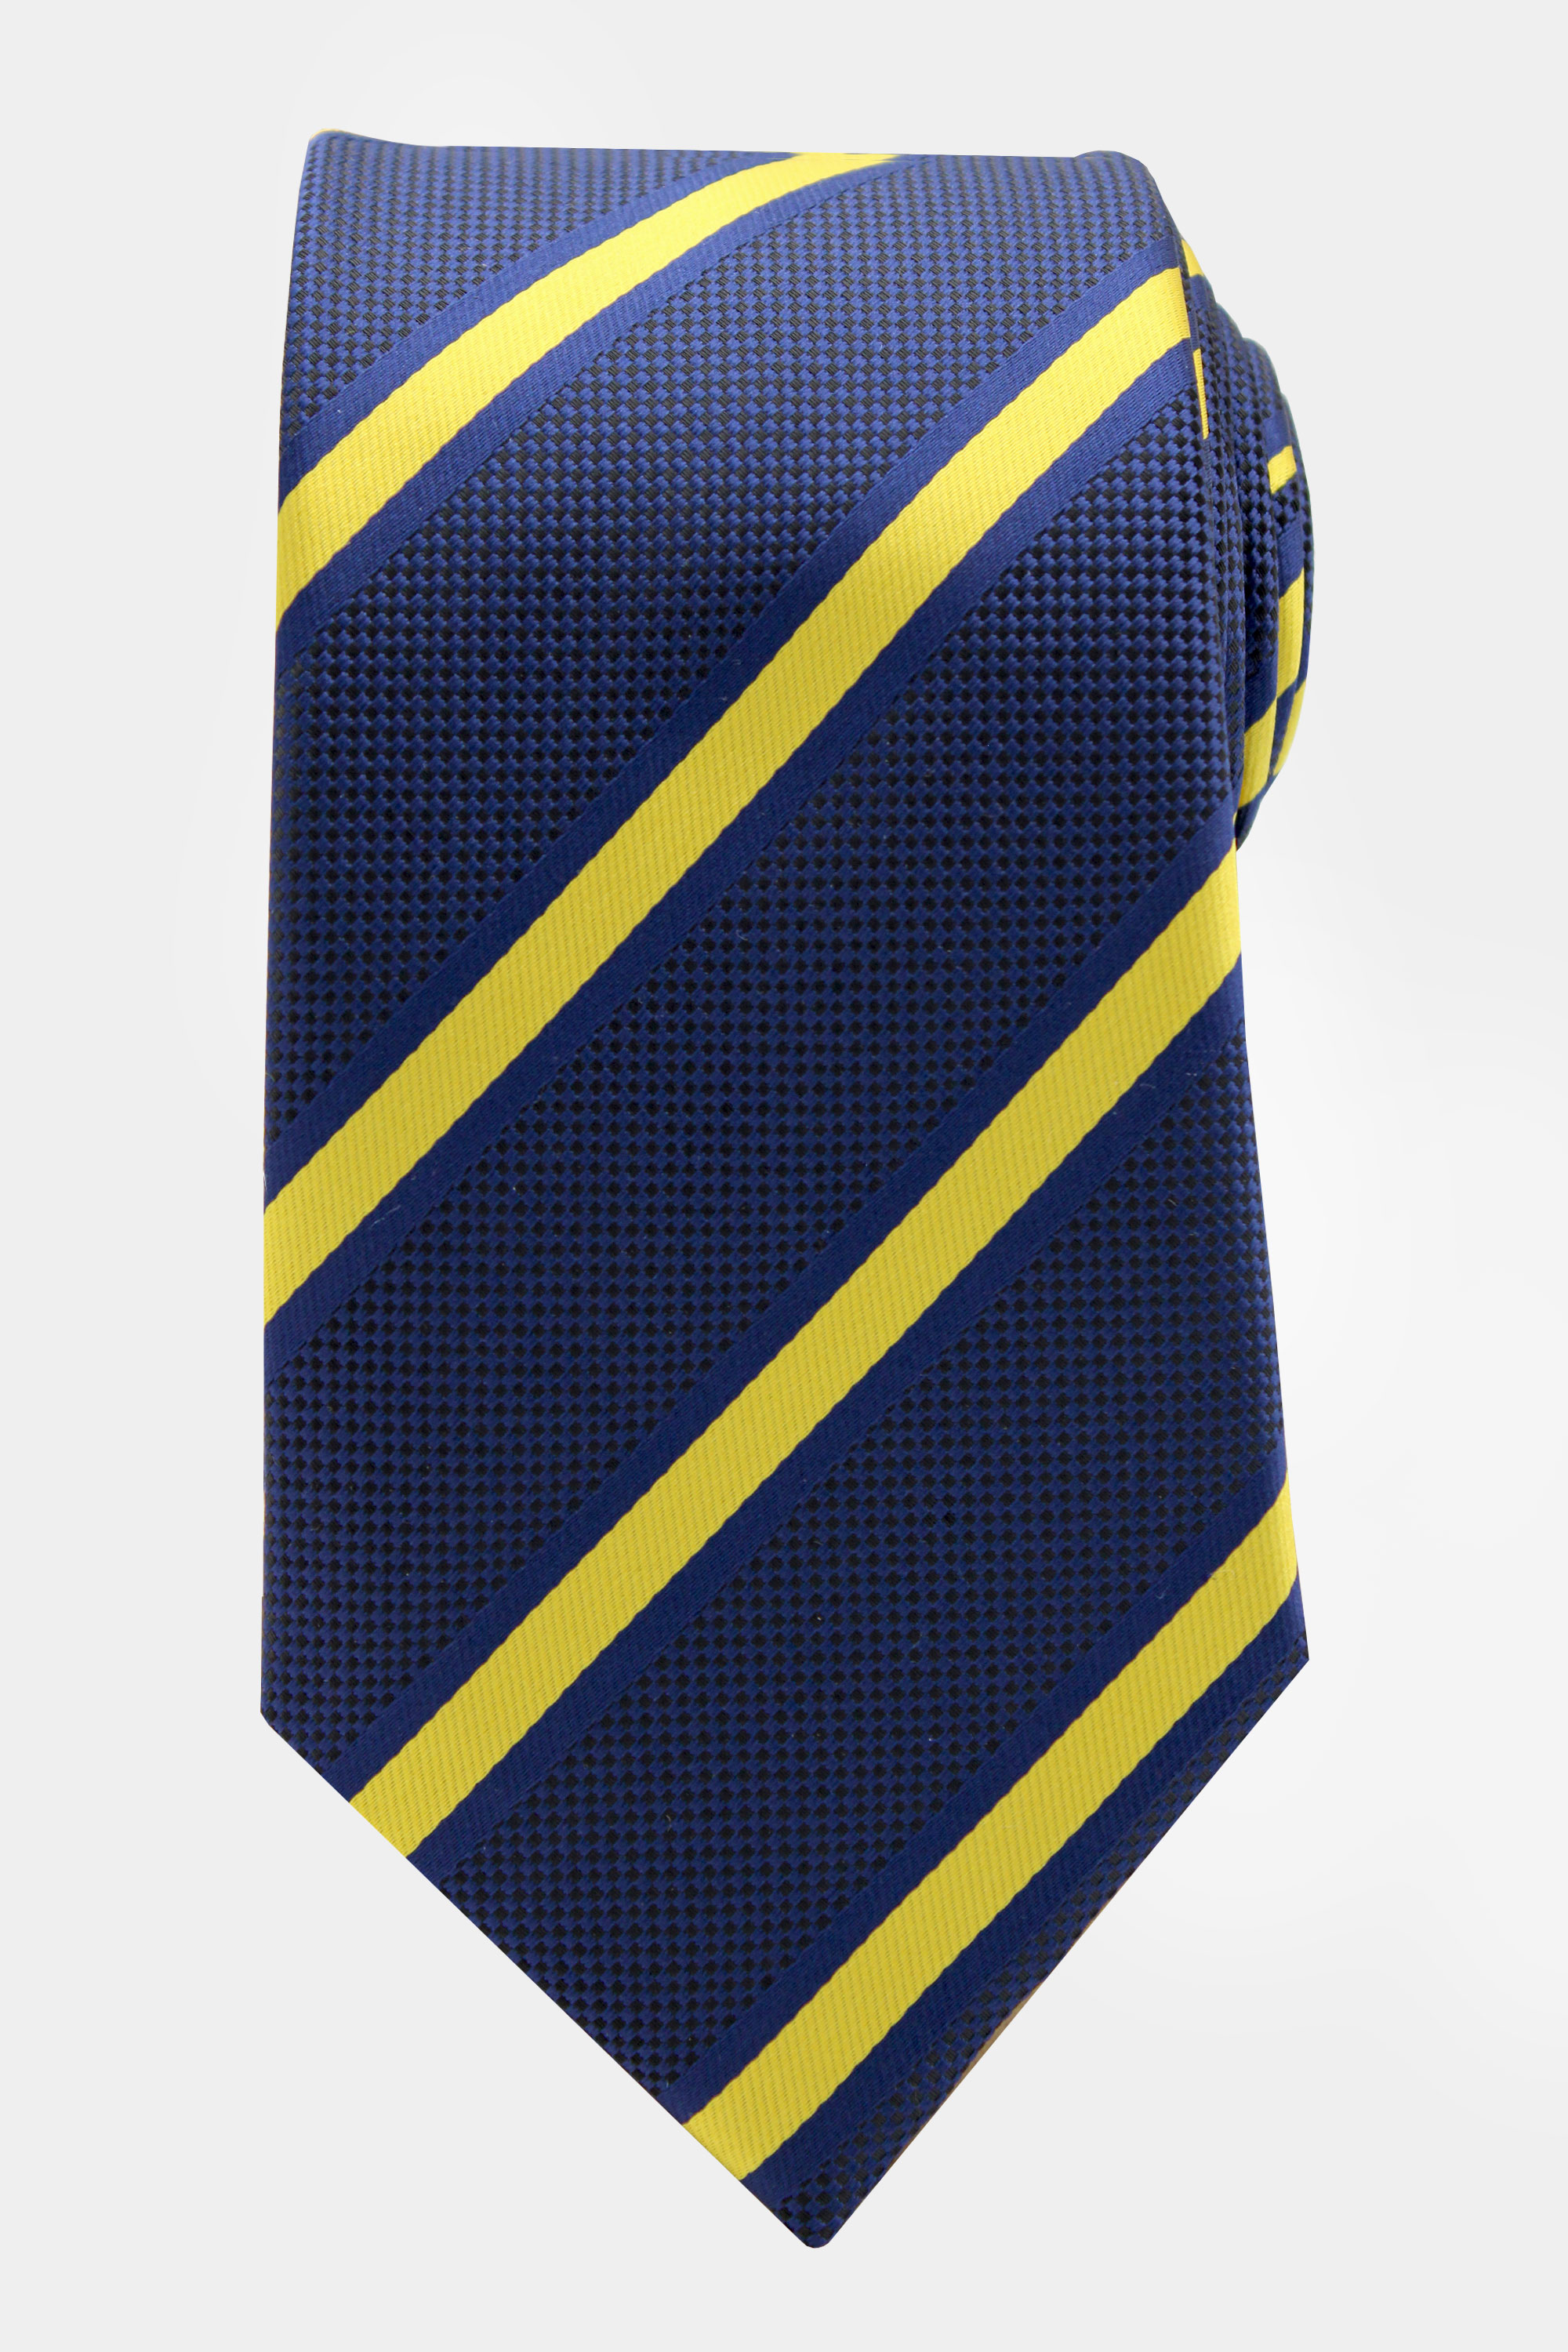 Navy-Blue-and-Gold-Striped-Tie-Grooms-Wedding-from-Gentlemansguru.com